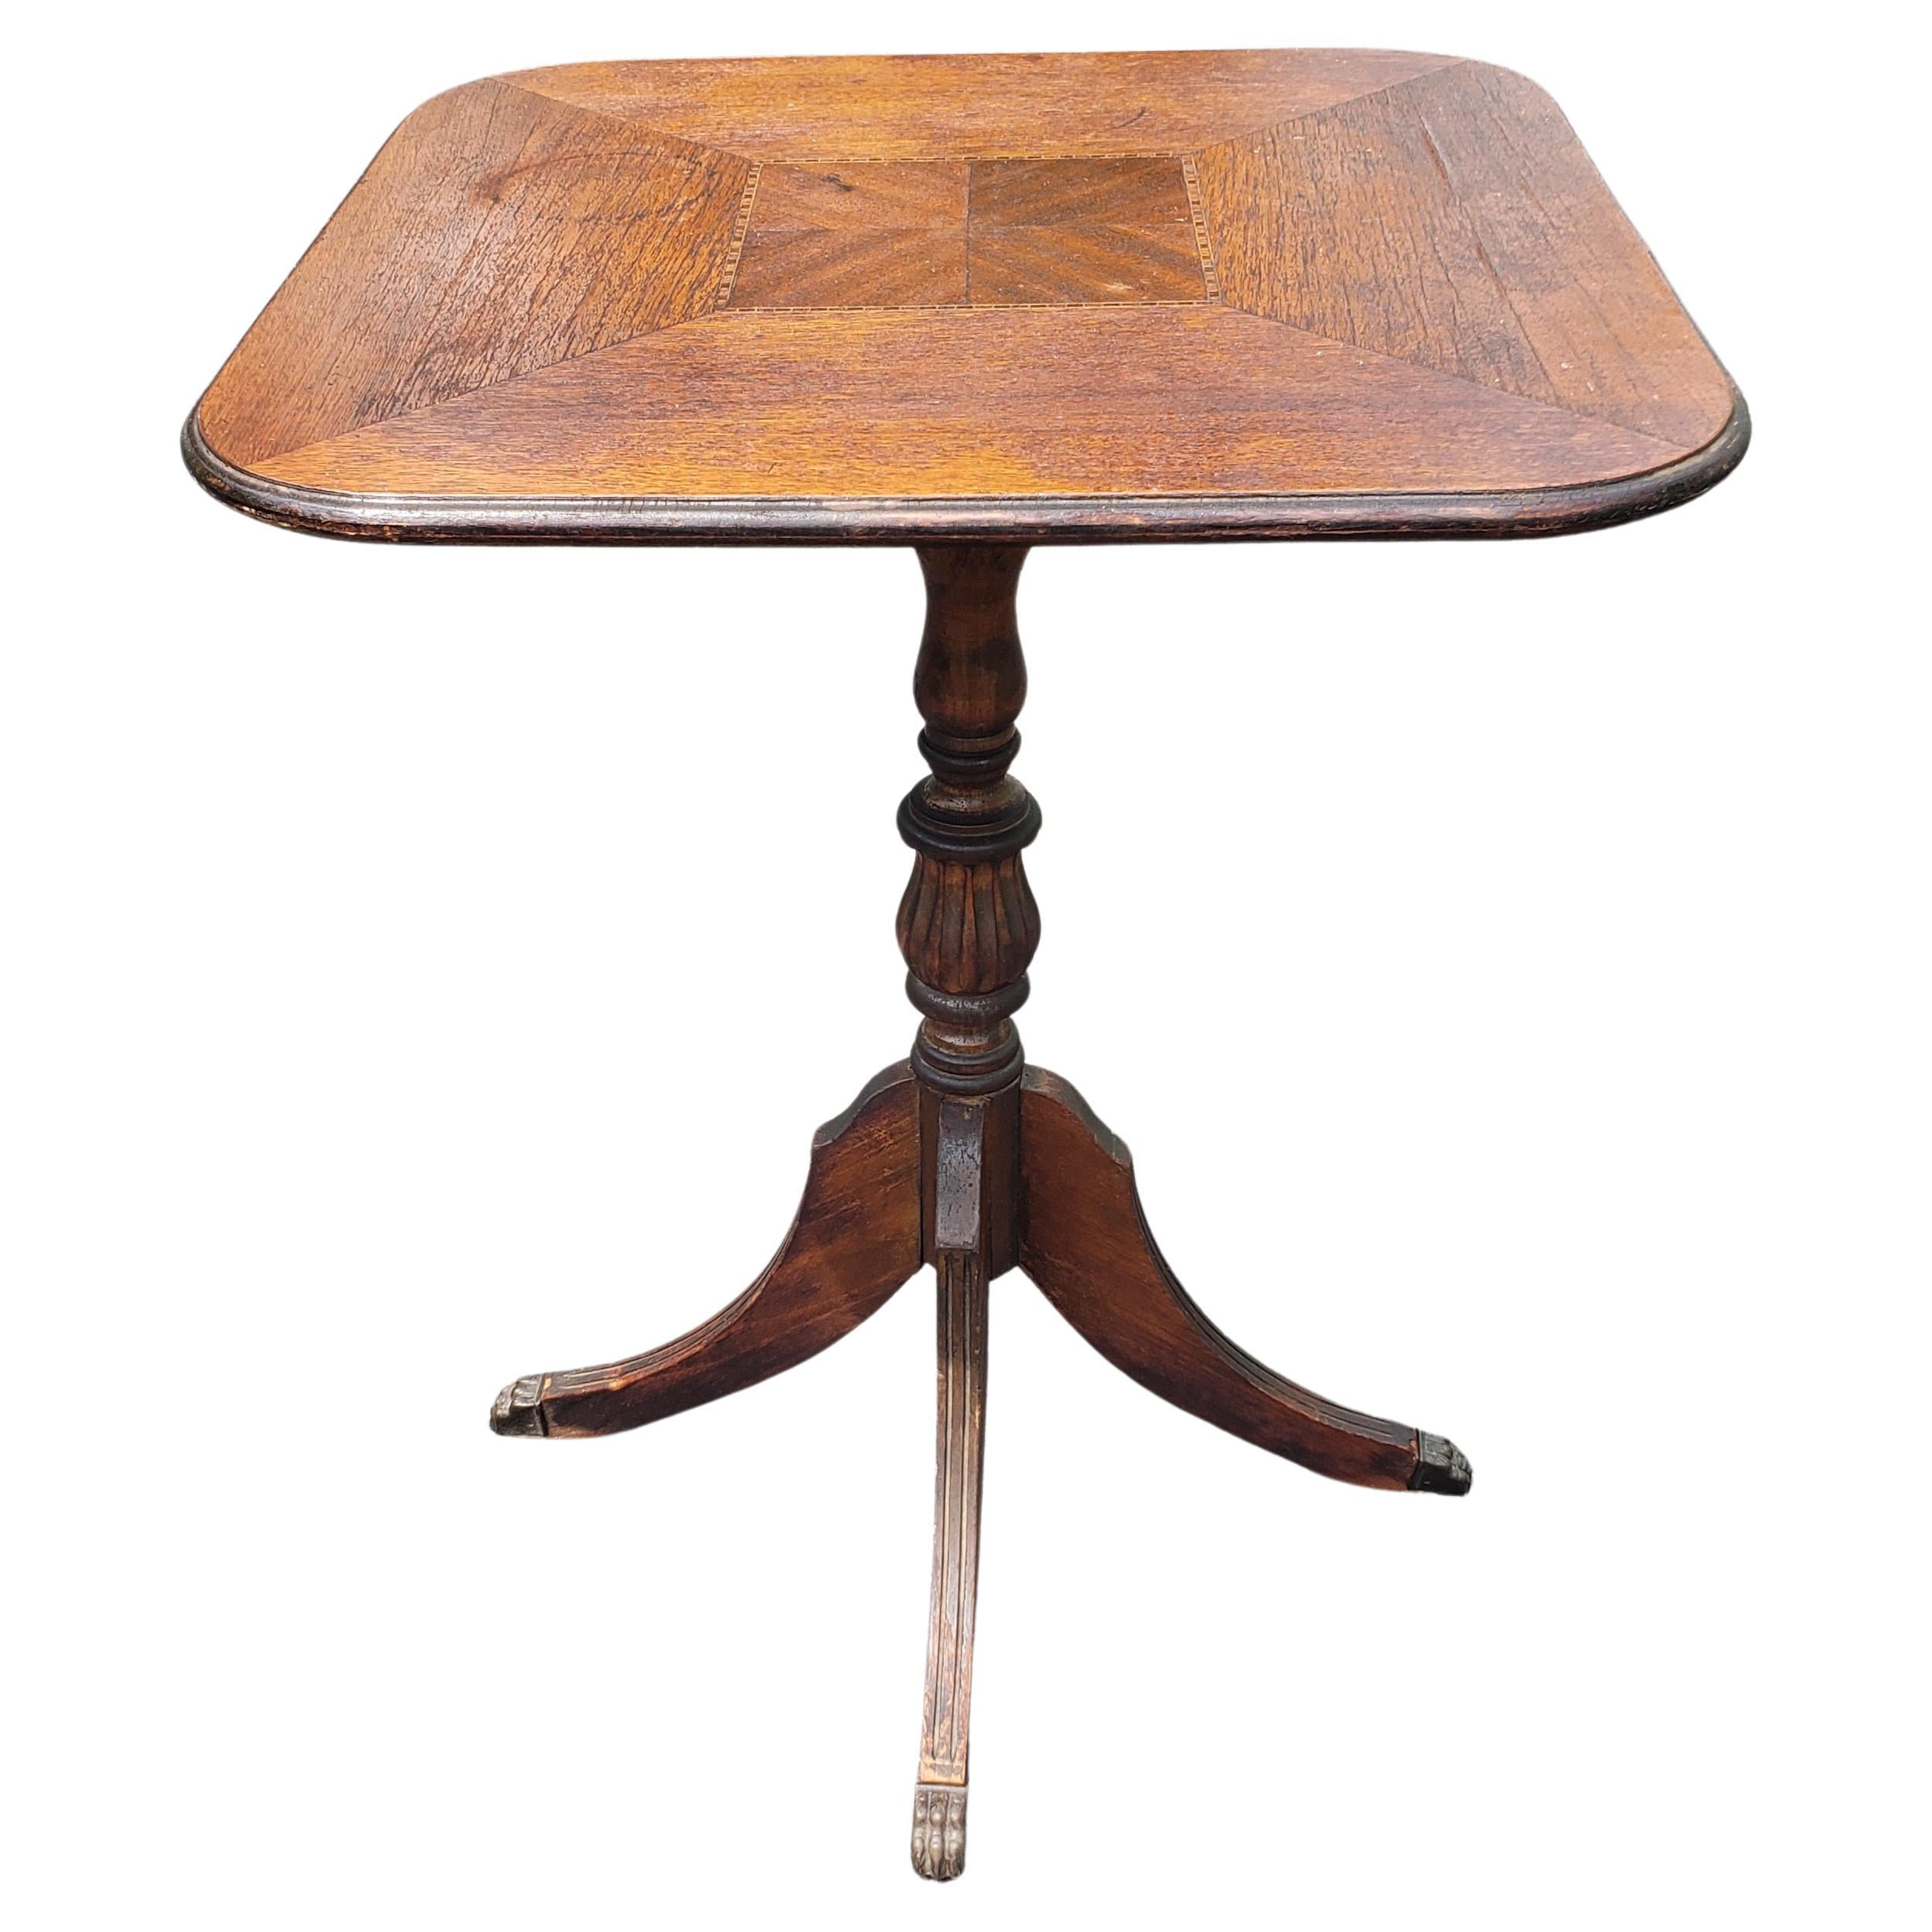 Early 20th century Walnut Inlay Tilt-Top Pedestal Quad Leg Desert or Side Table. Measures 18